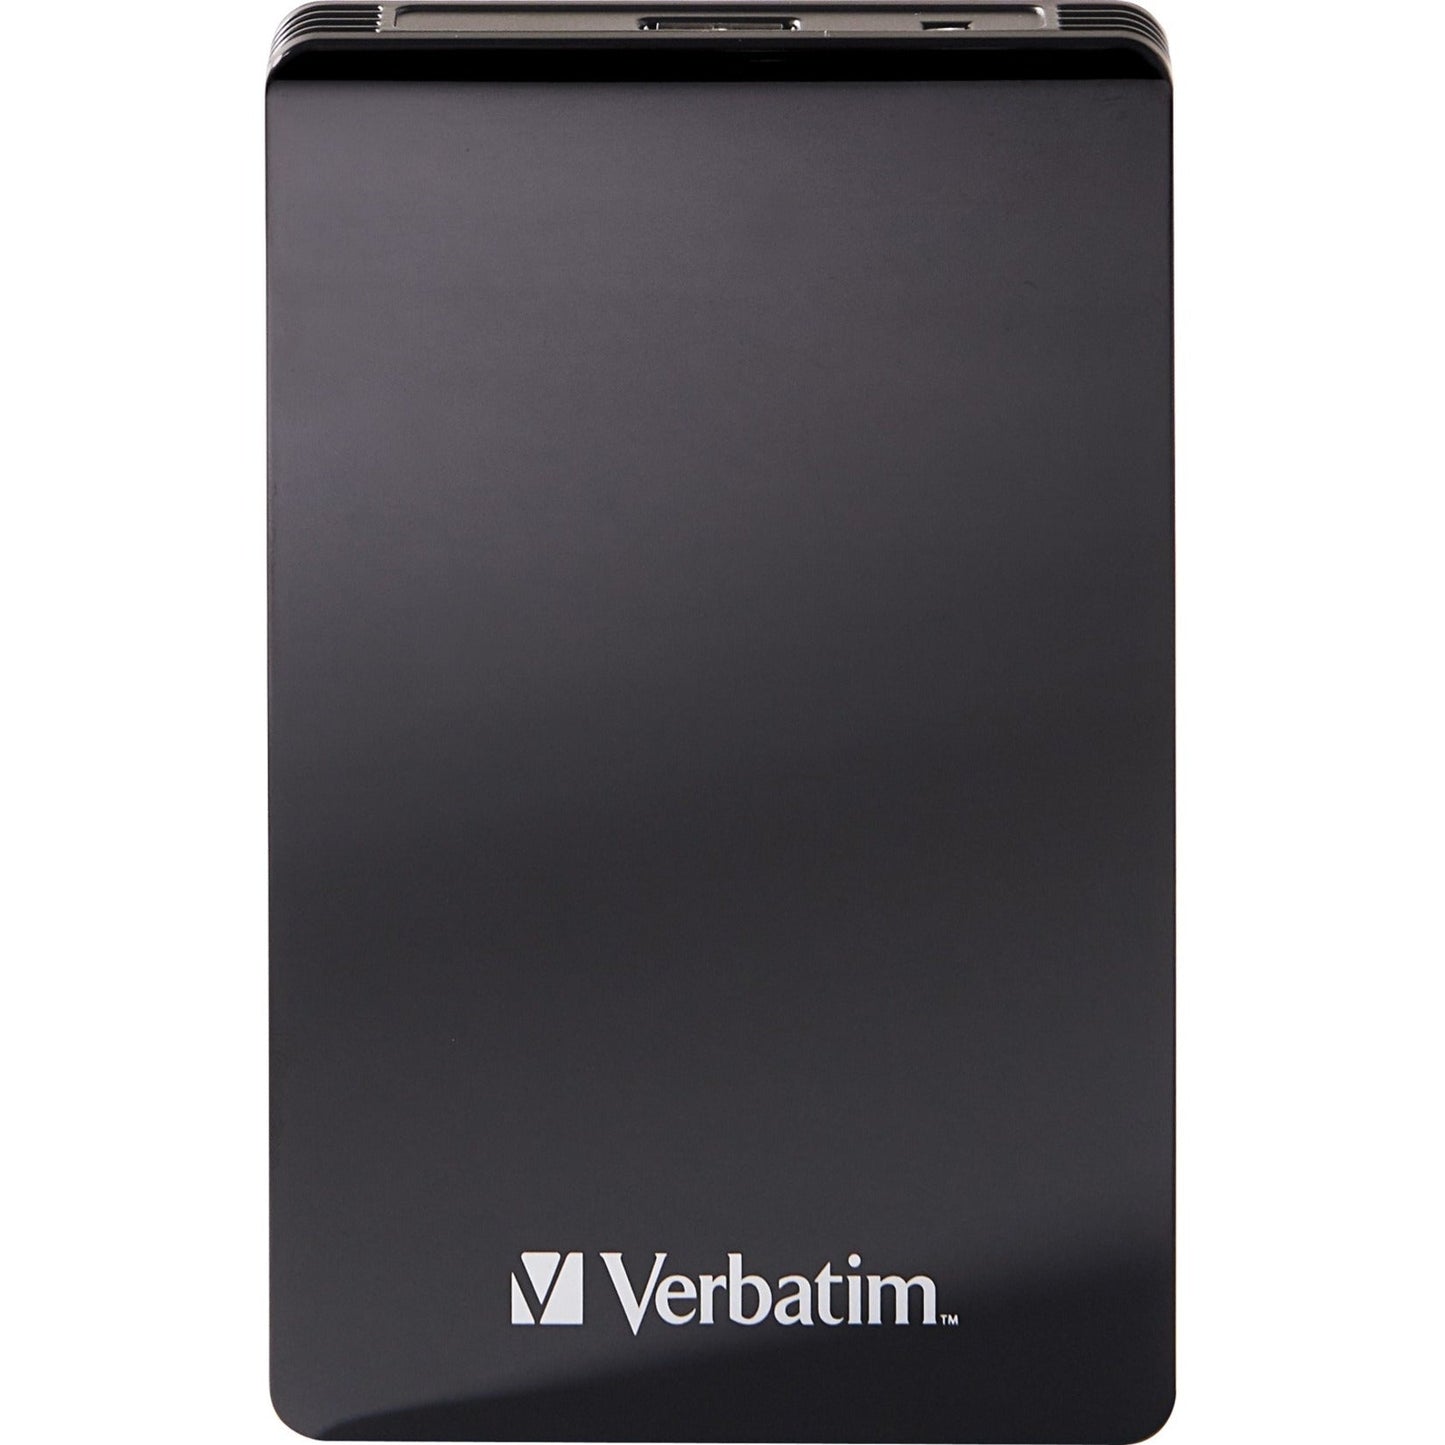 Verbatim 128GB Vx460 External SSD USB 3.1 Gen 1 - Black